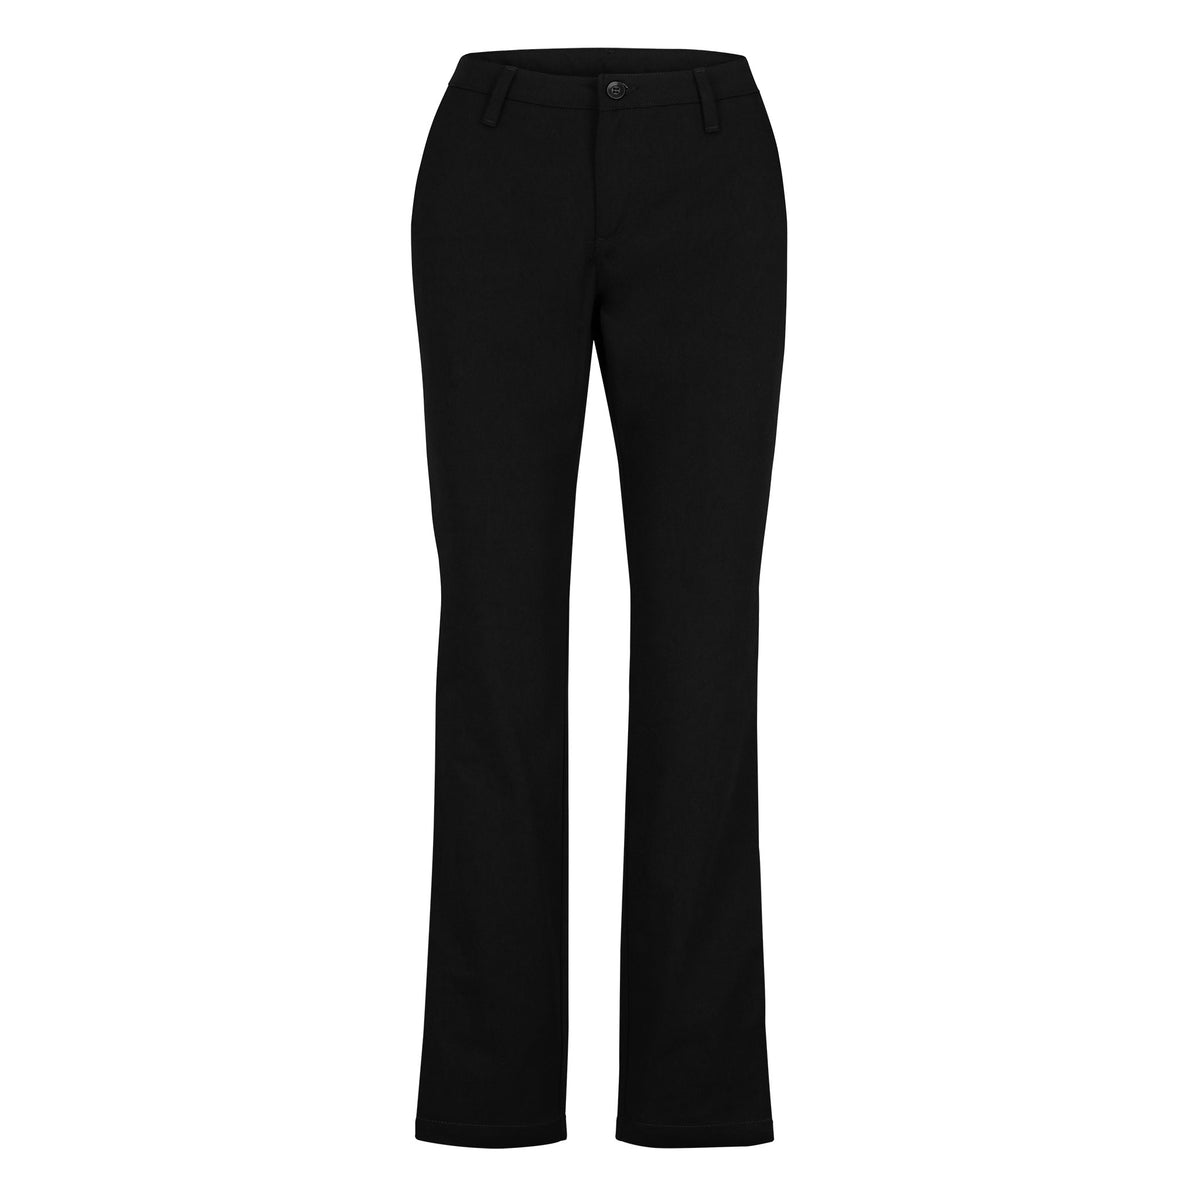 Women’s Twill Pants (Black)